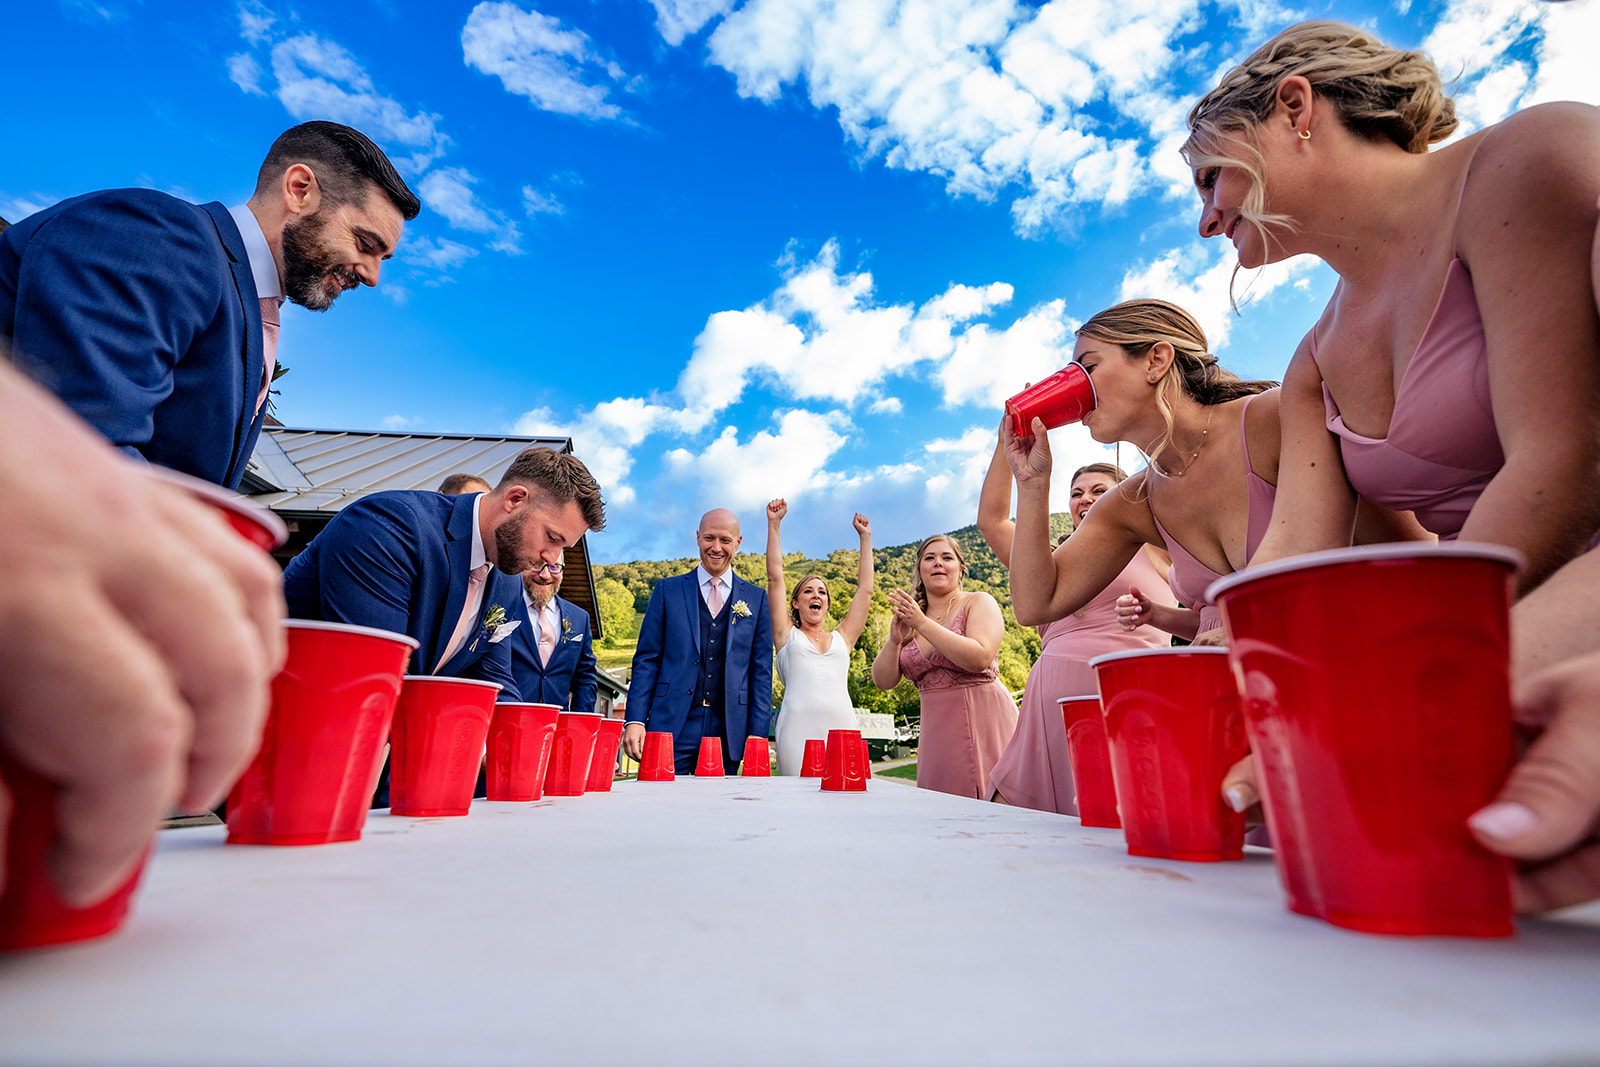 fun photos of wedding party playing flip cup